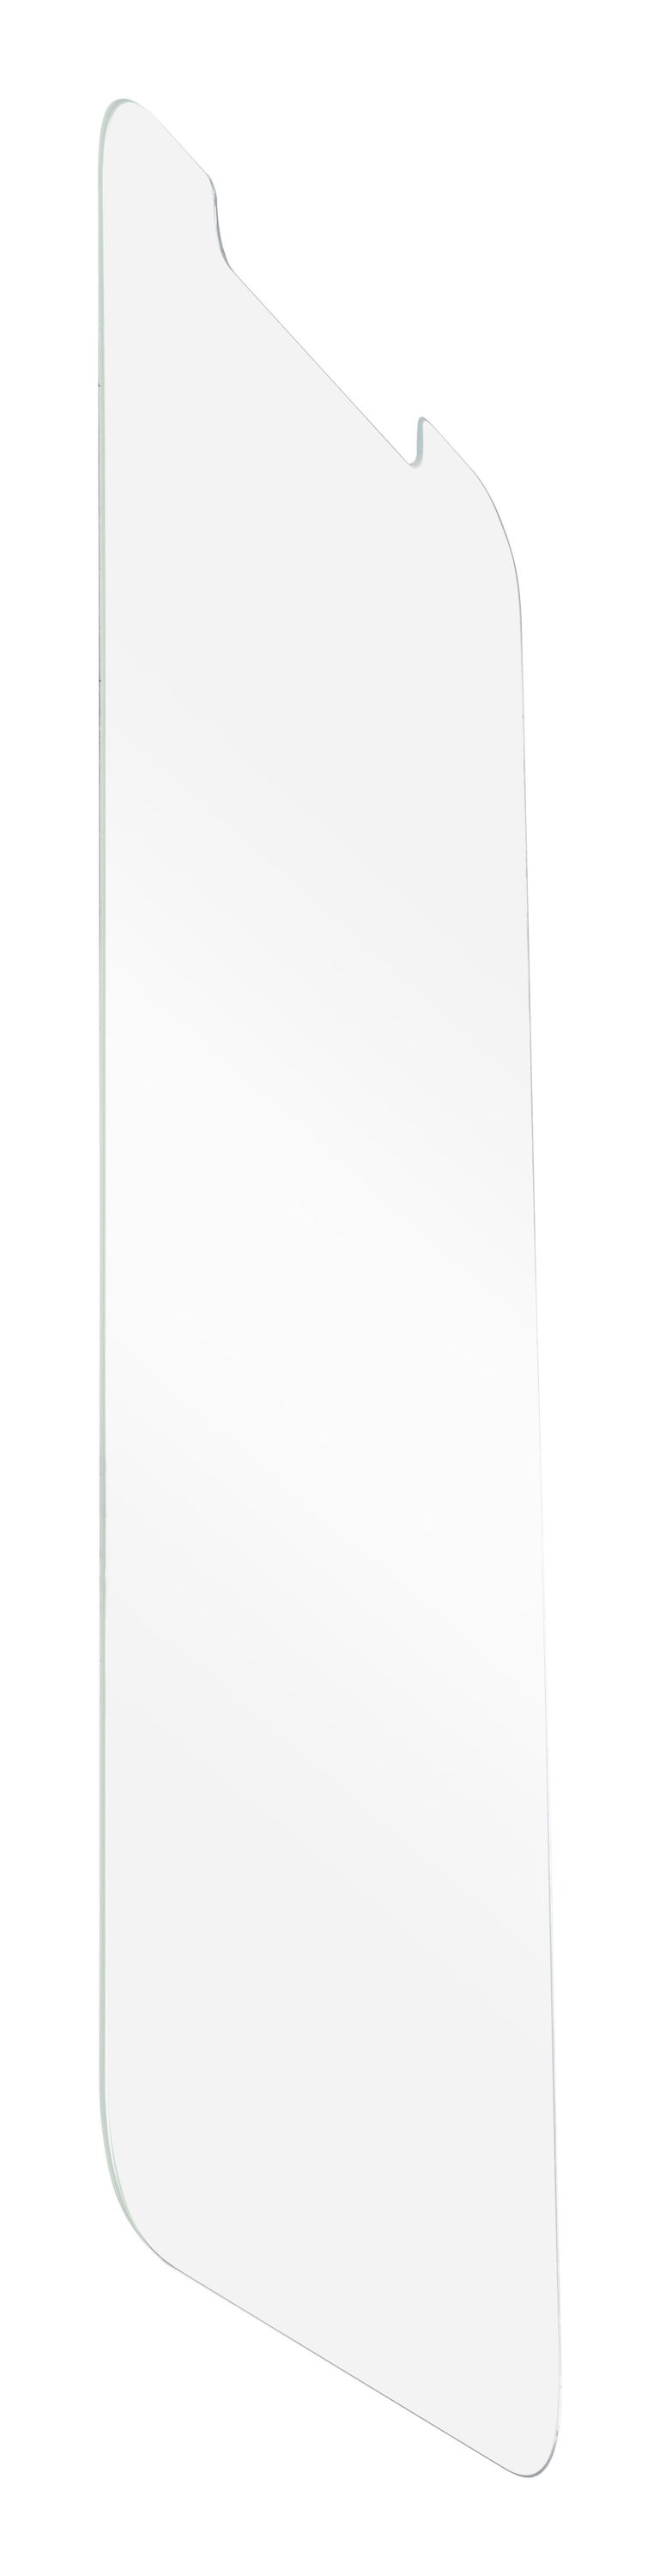 iPhone 12 Pro Max, SP tetra glass, transparant